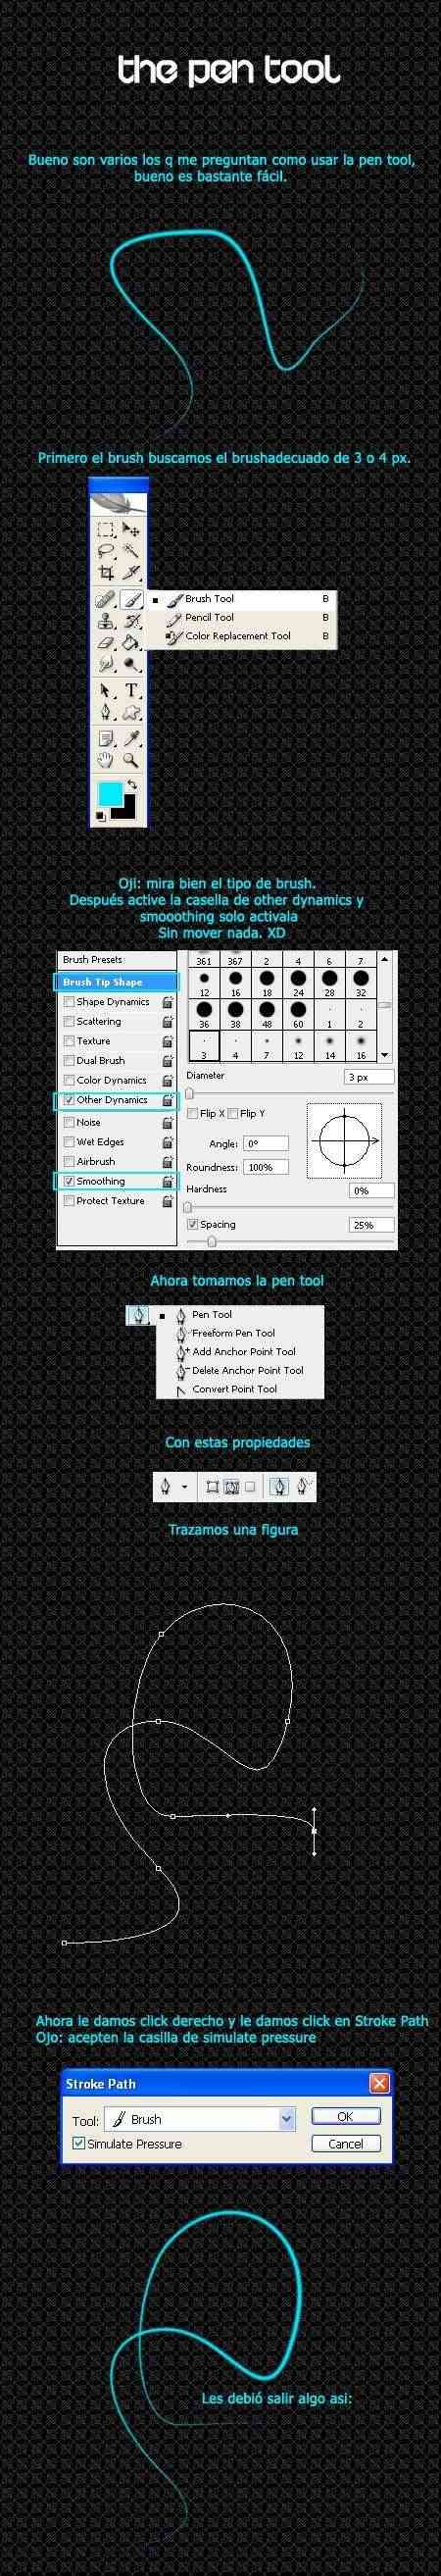 tutorial herramienta pen tool Tutori10